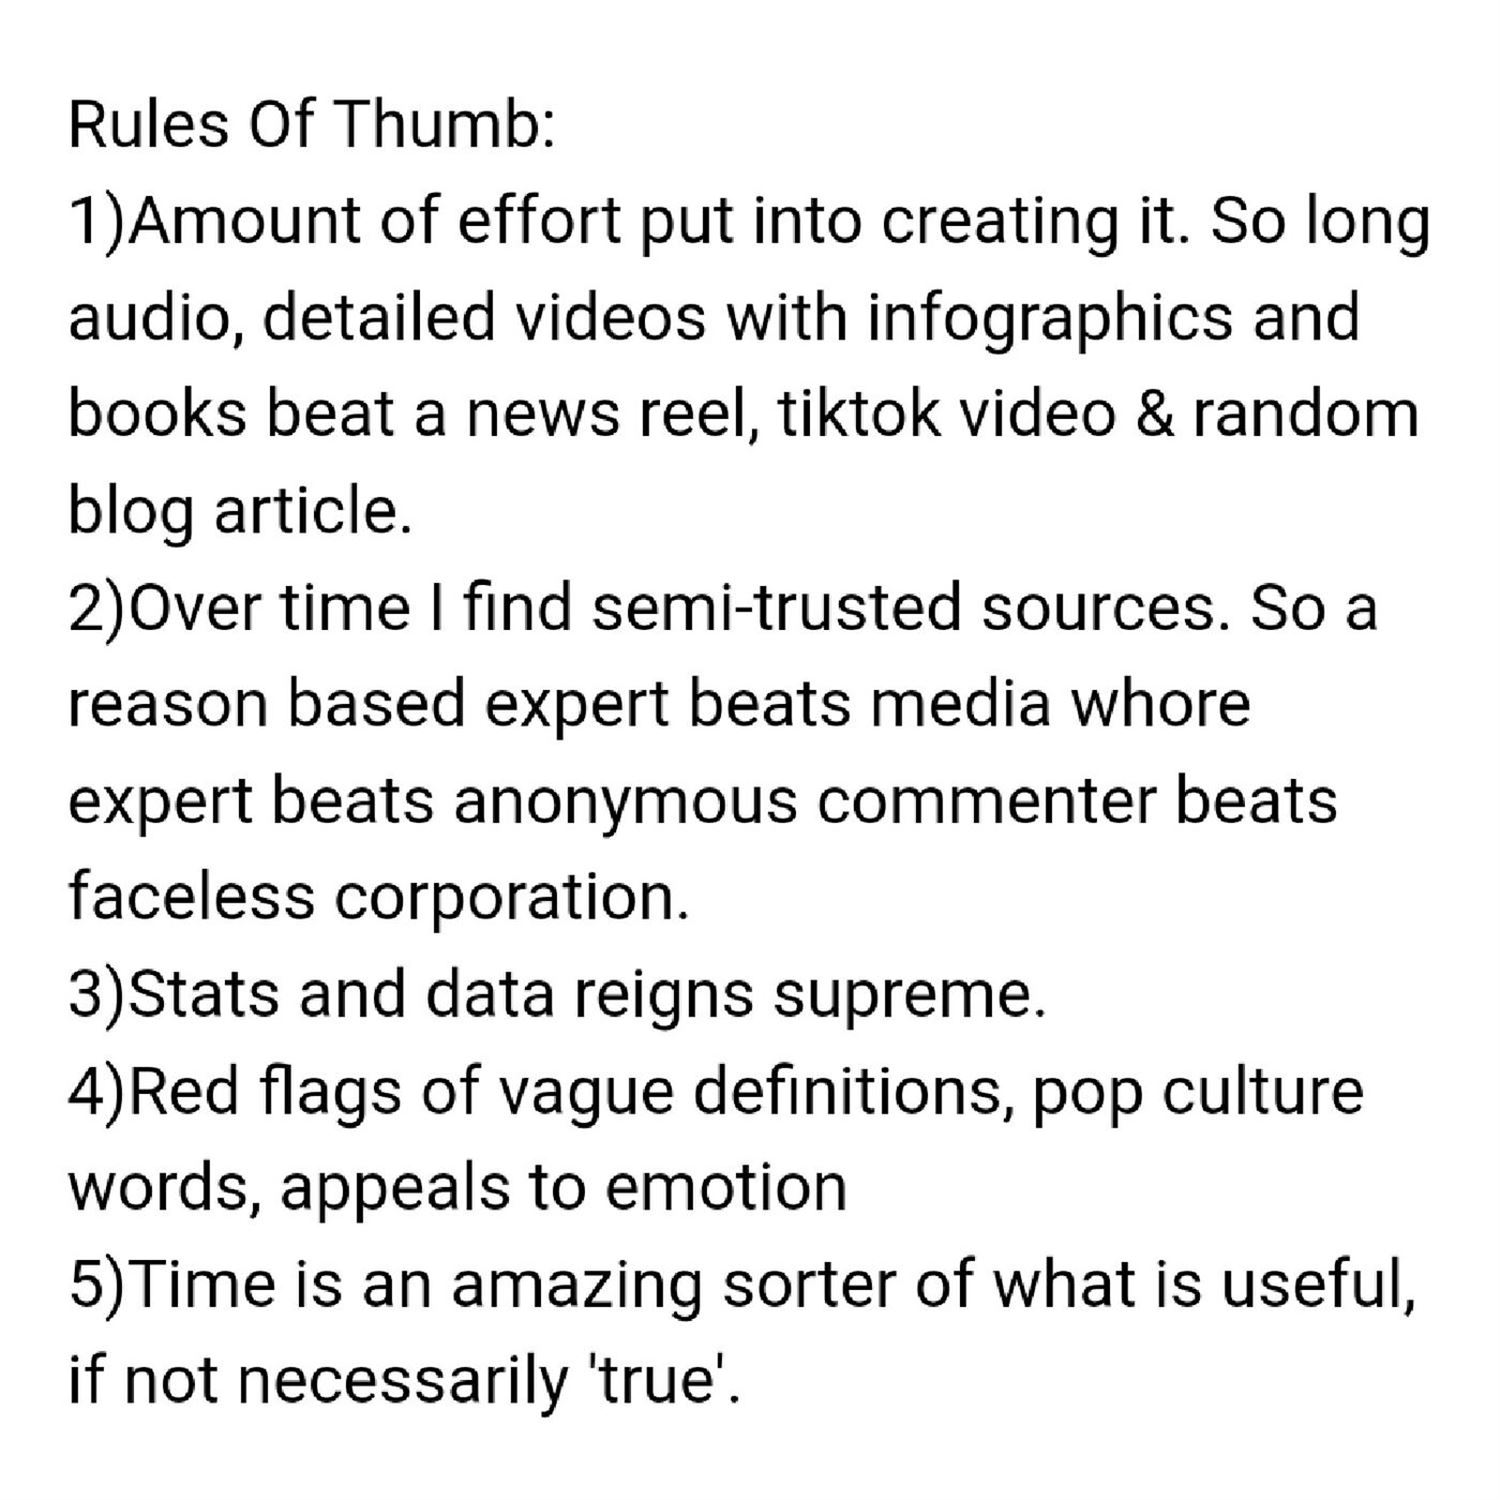 Kyrin's rules of thumb